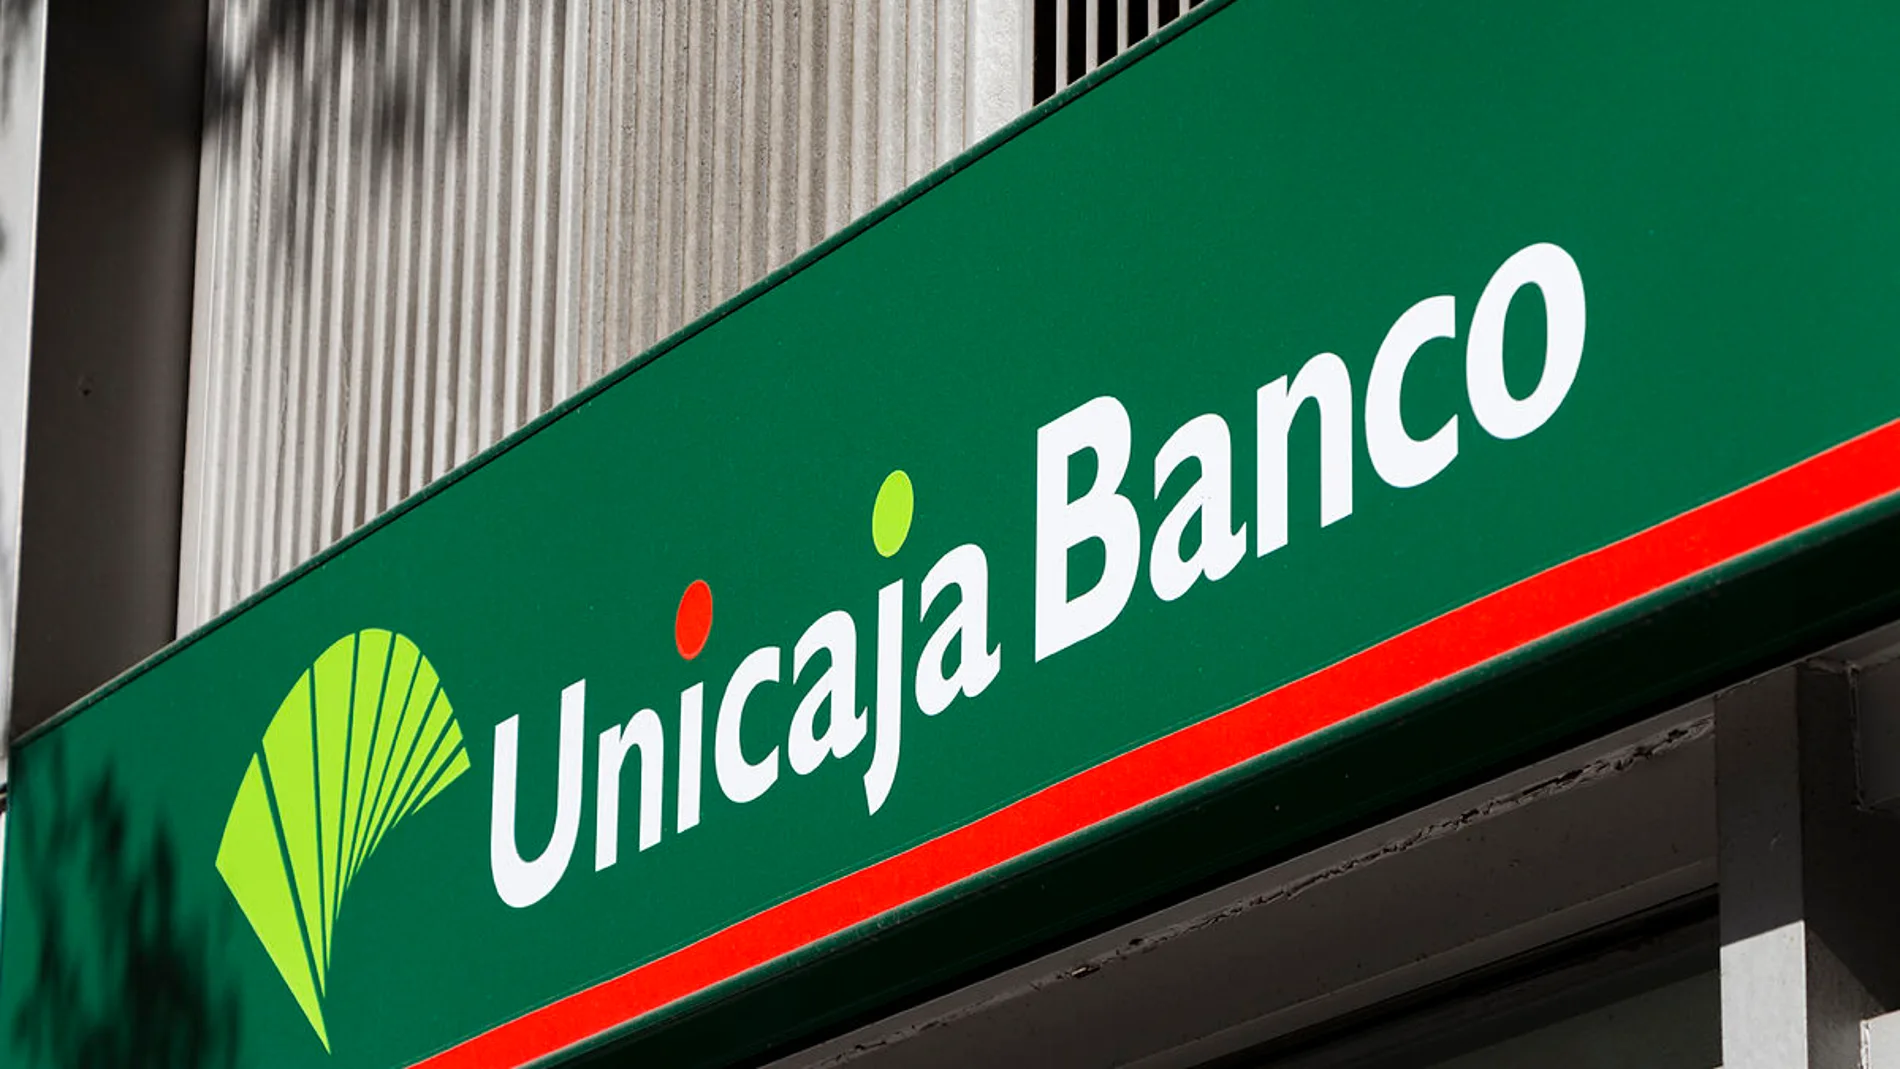 Logo de Unicaja Banco